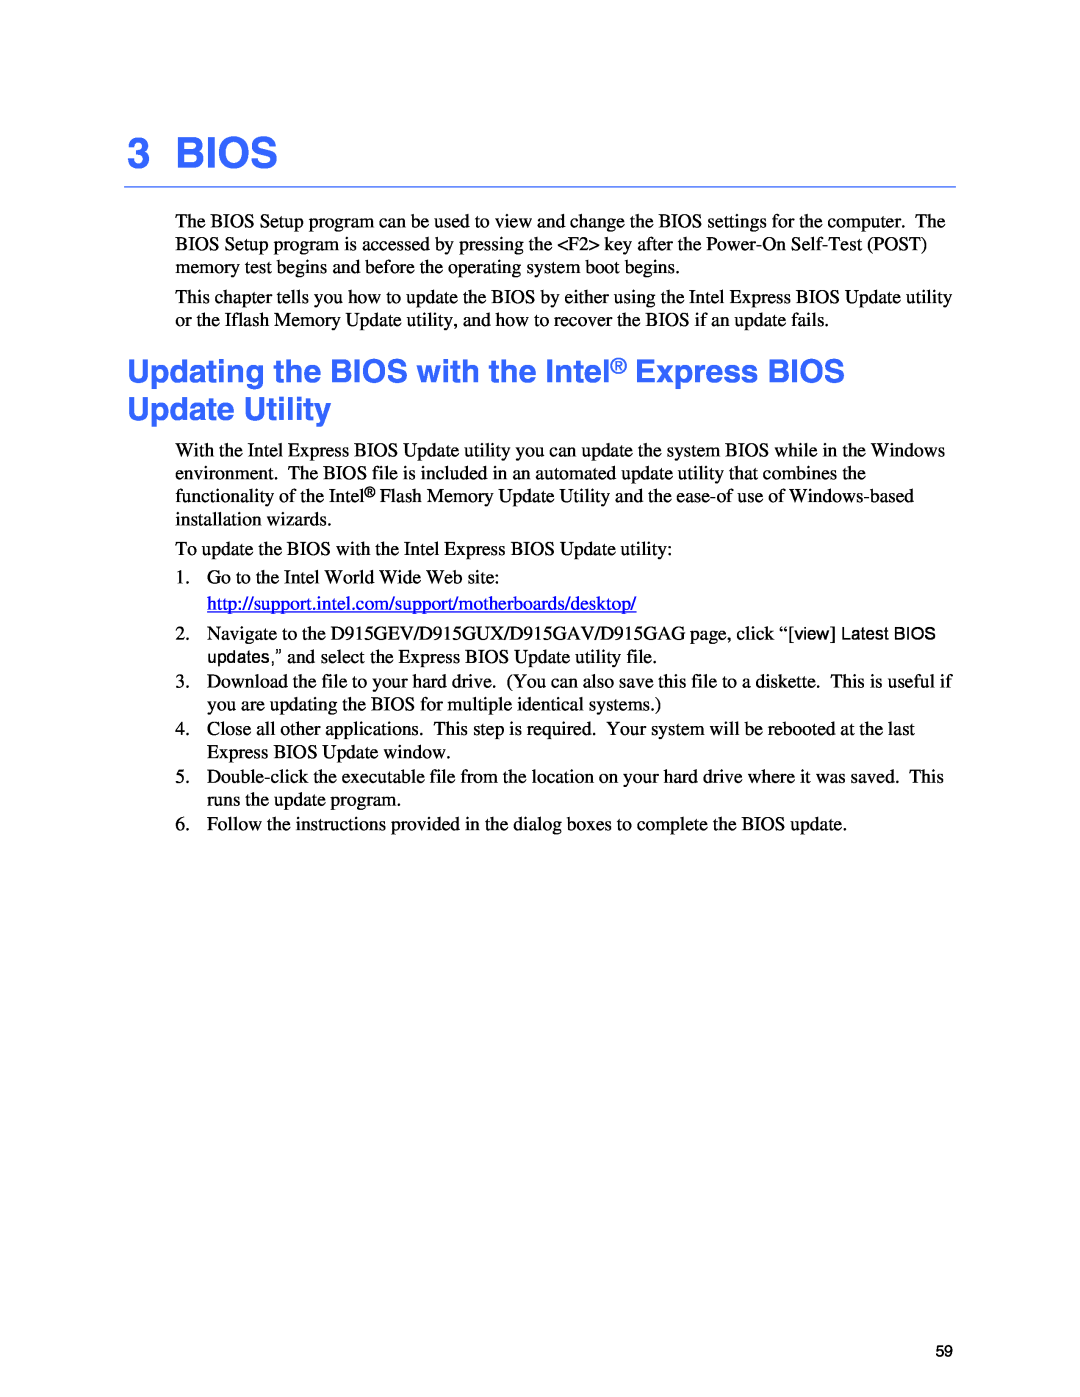 Intel D915GAV, D915GAG, D915GUX, D915GEV manual Bios, Updating the BIOS with the Intel Express BIOS, Update Utility 